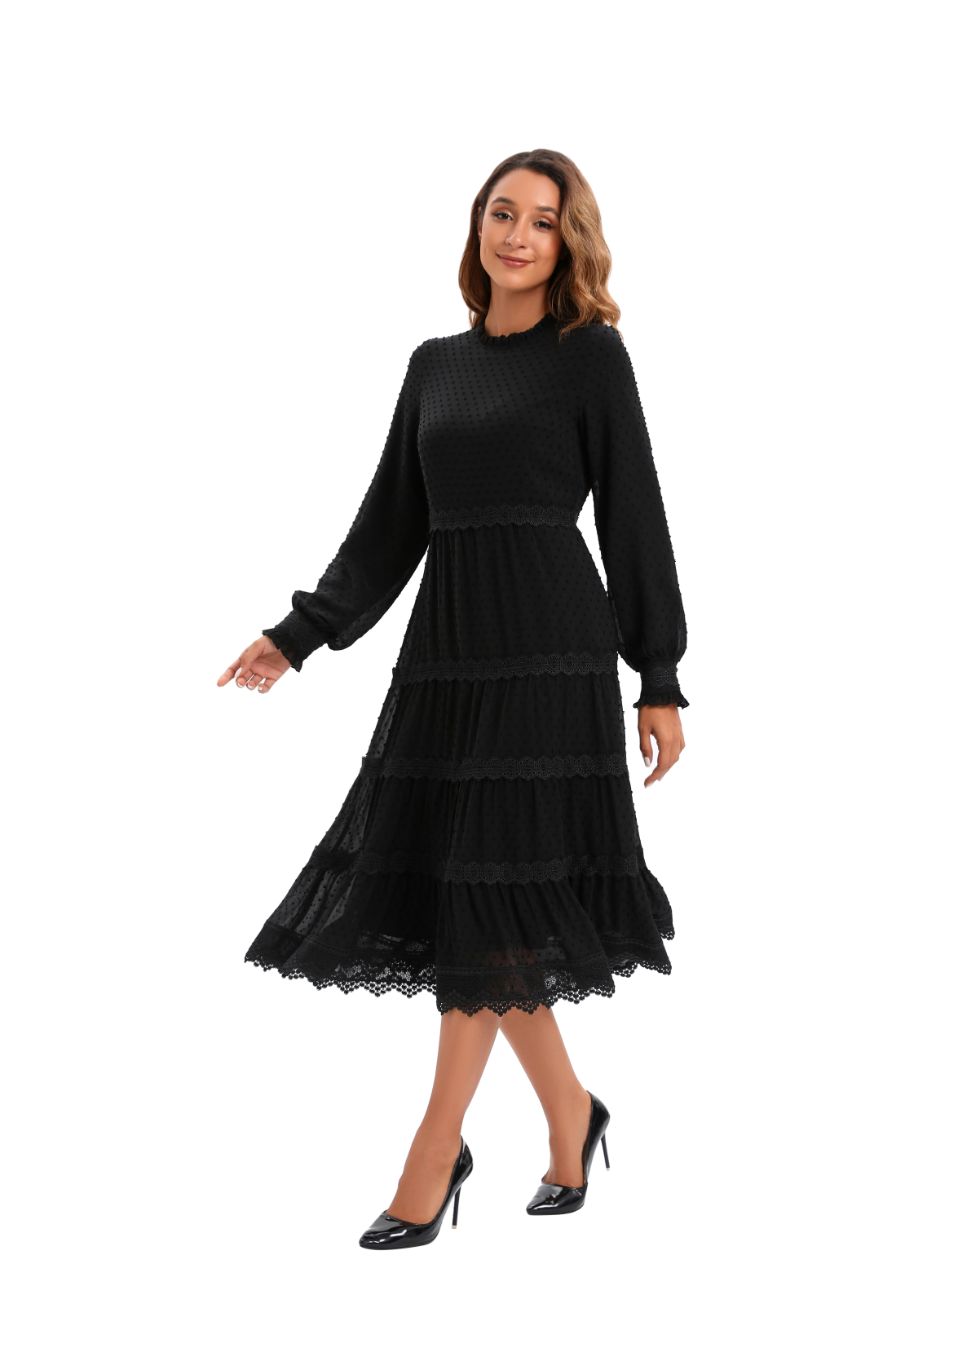 Modest Elegant Long Sleeves  Black Dress W/ Lace trimming 3086 - alamaud